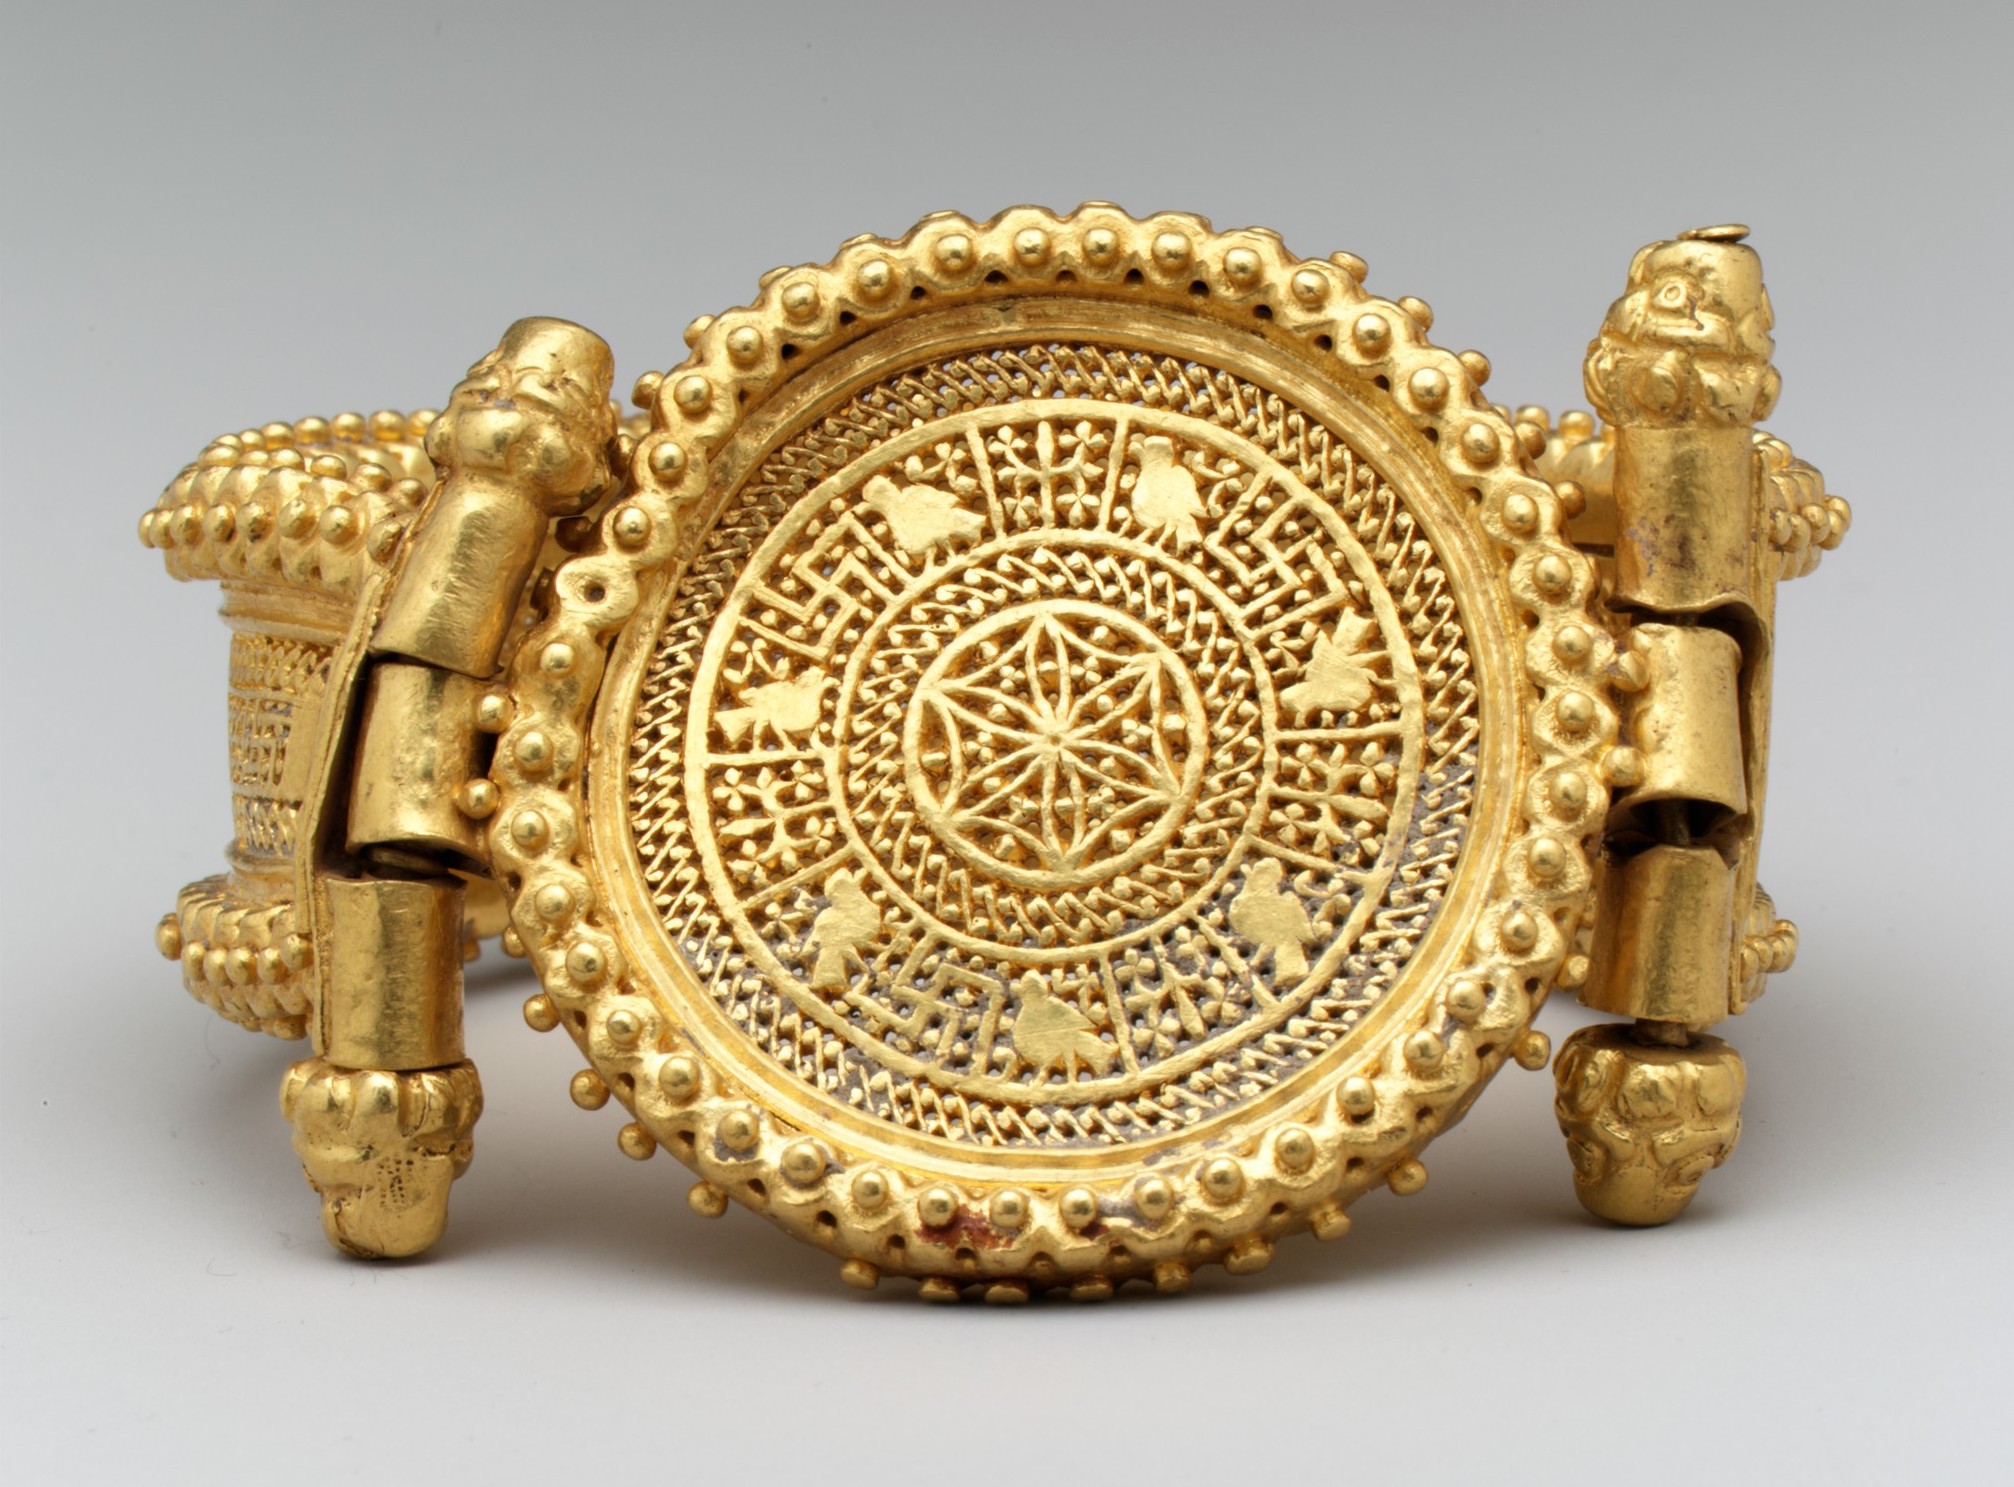 Bracelet, Roman-Byzantine, Rome (?), c. 400, gold, c. 7 x 6 x 5 cm, 162g, (The Metropolitan Museum of Art)